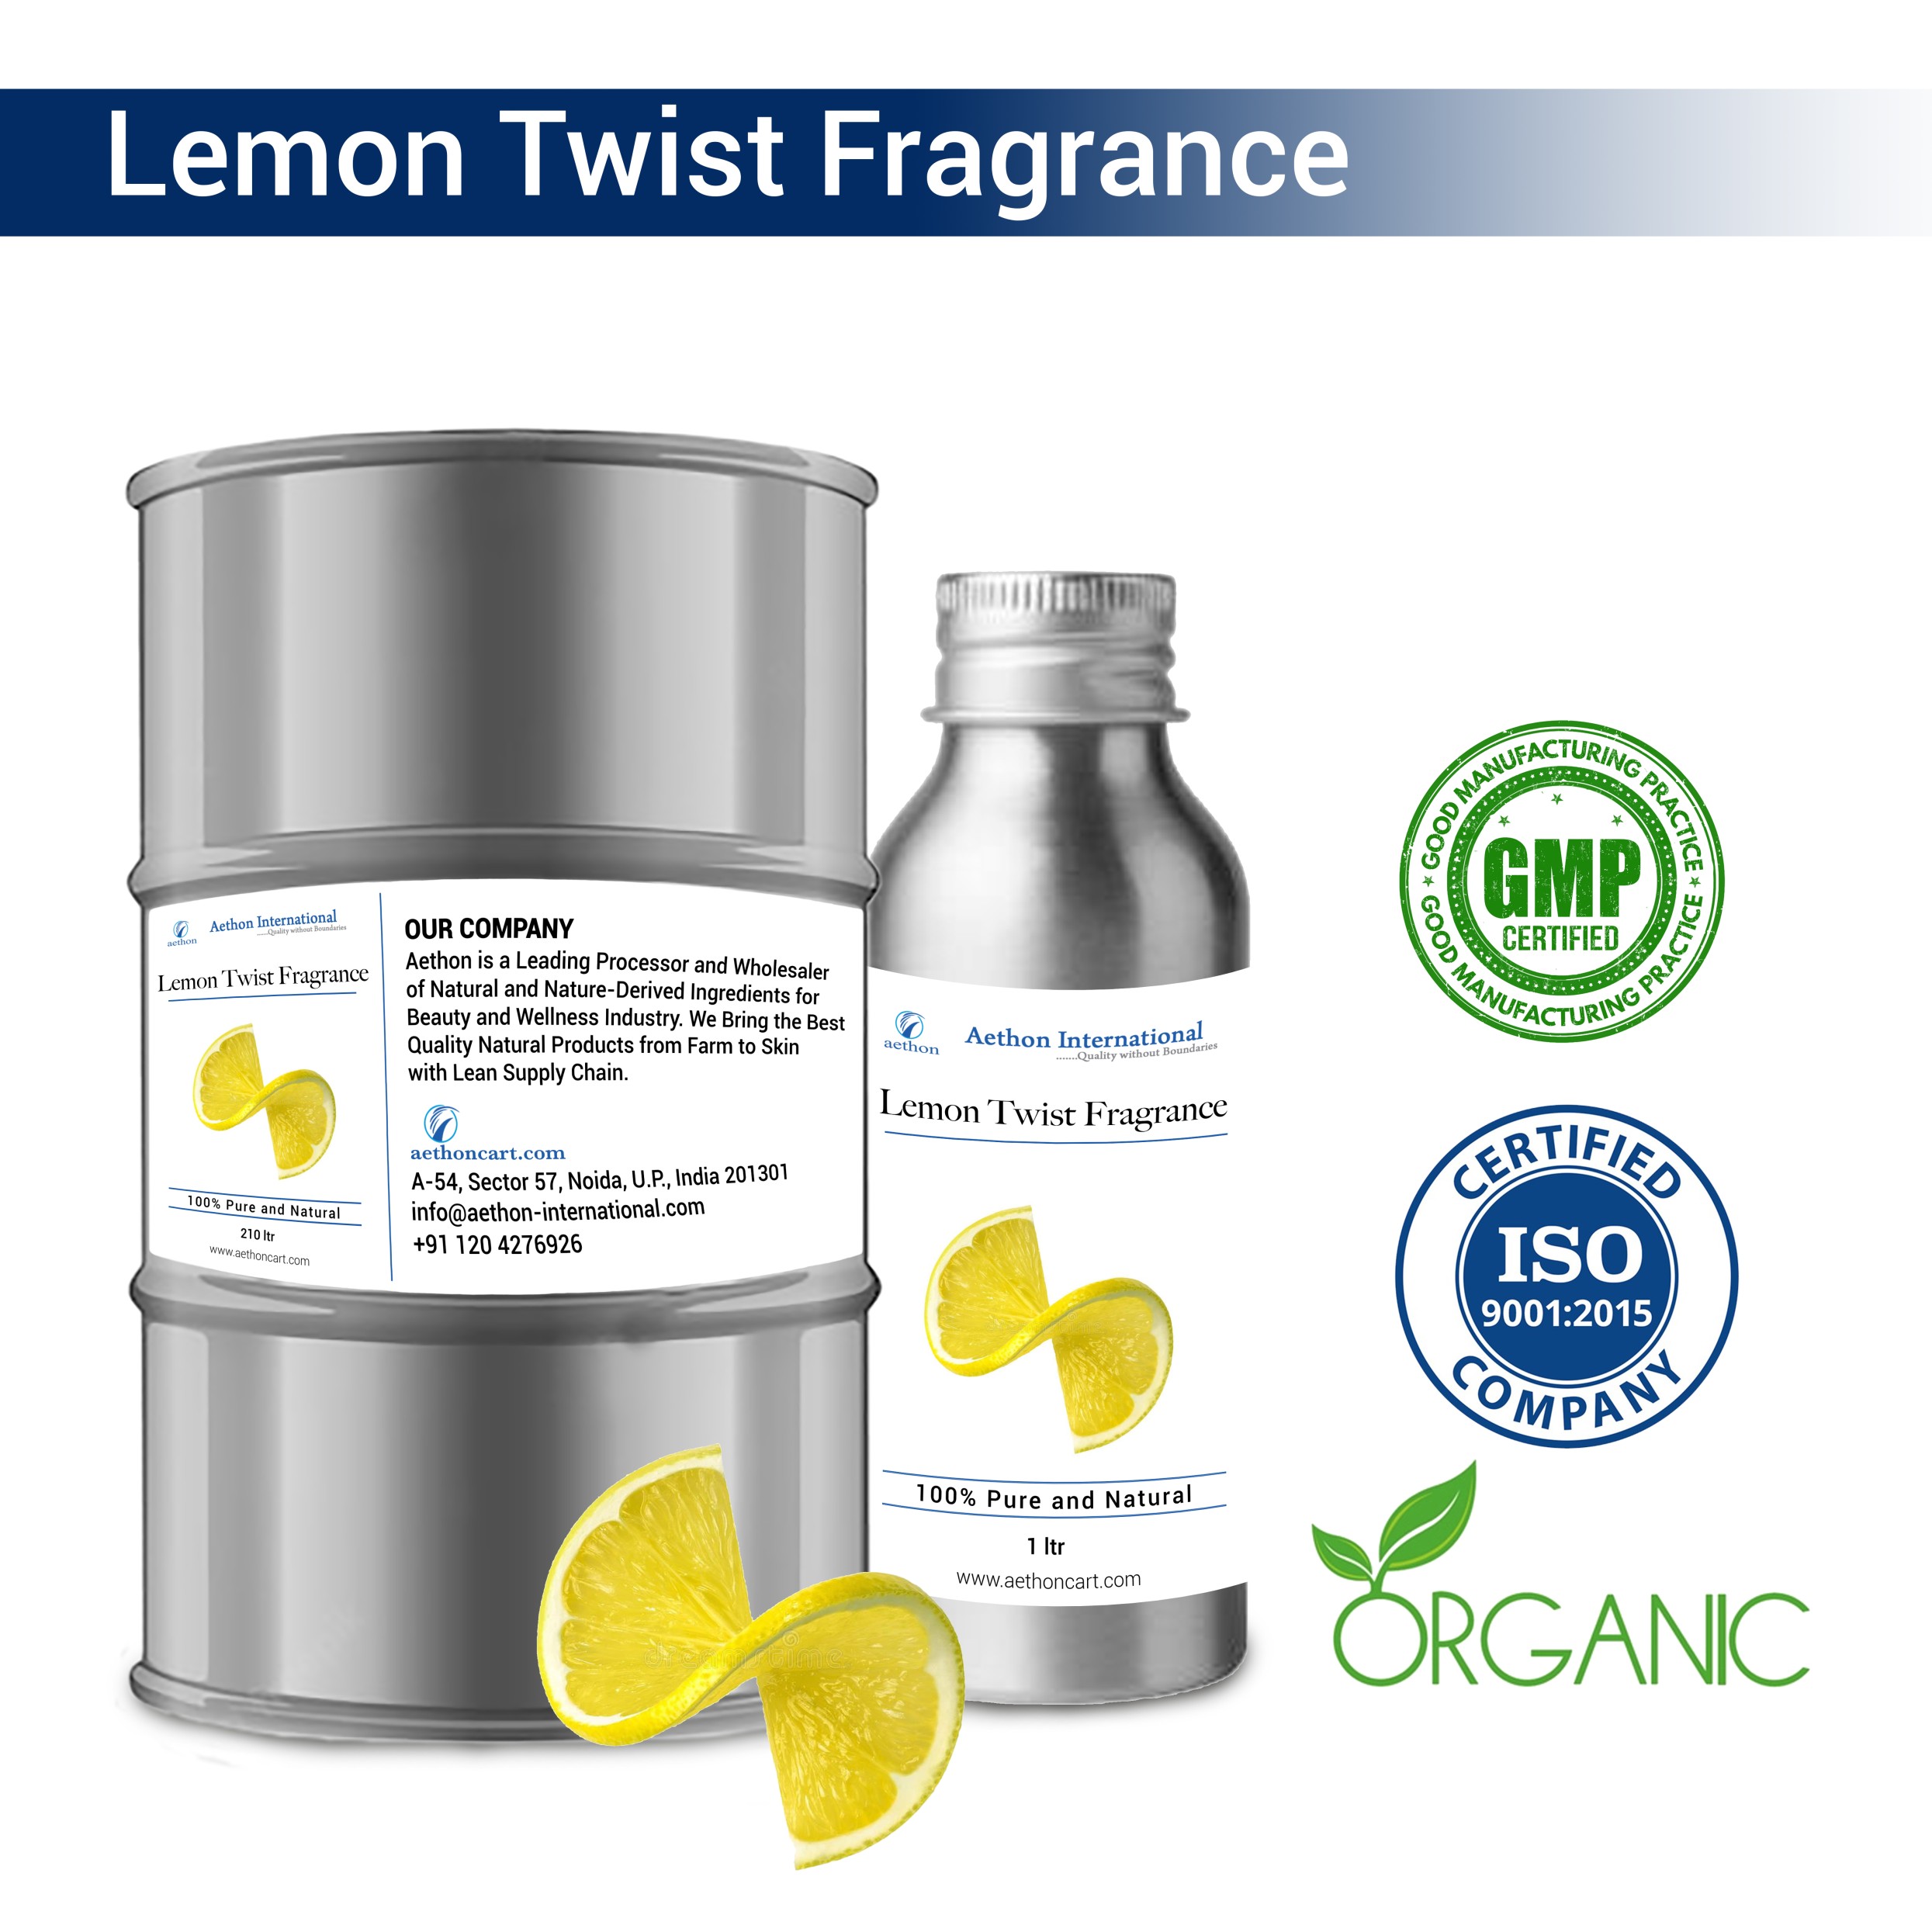 Lemon Twist Fragrance